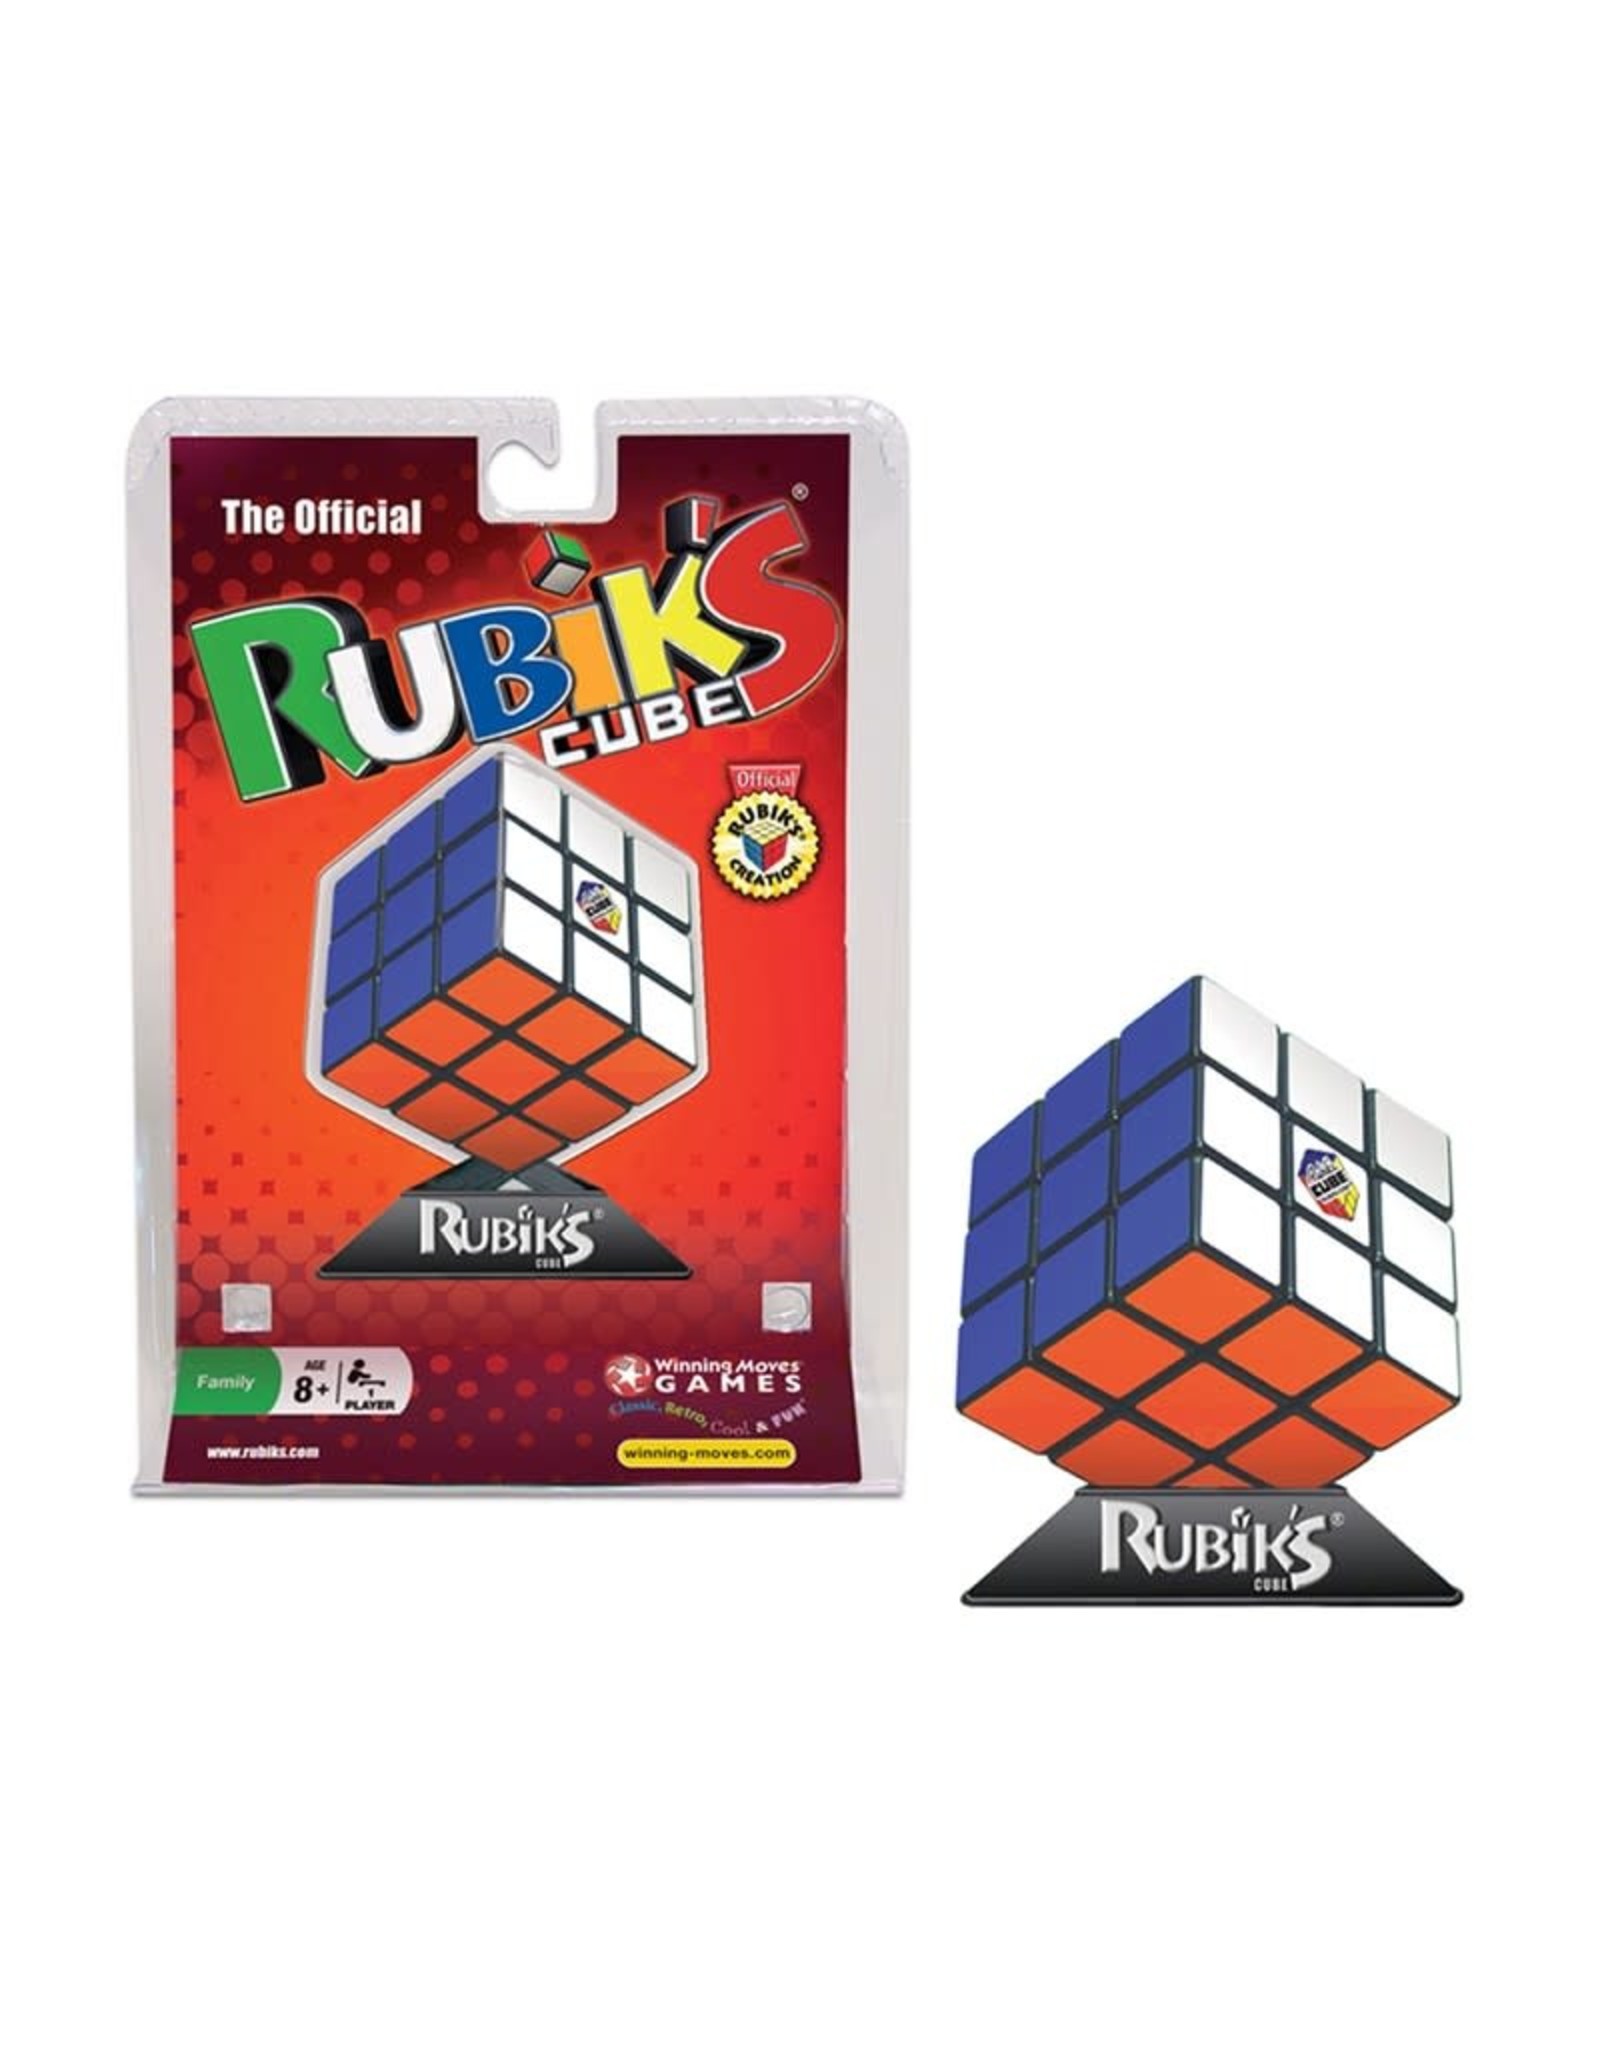 Original Rubiks Cube 3x3